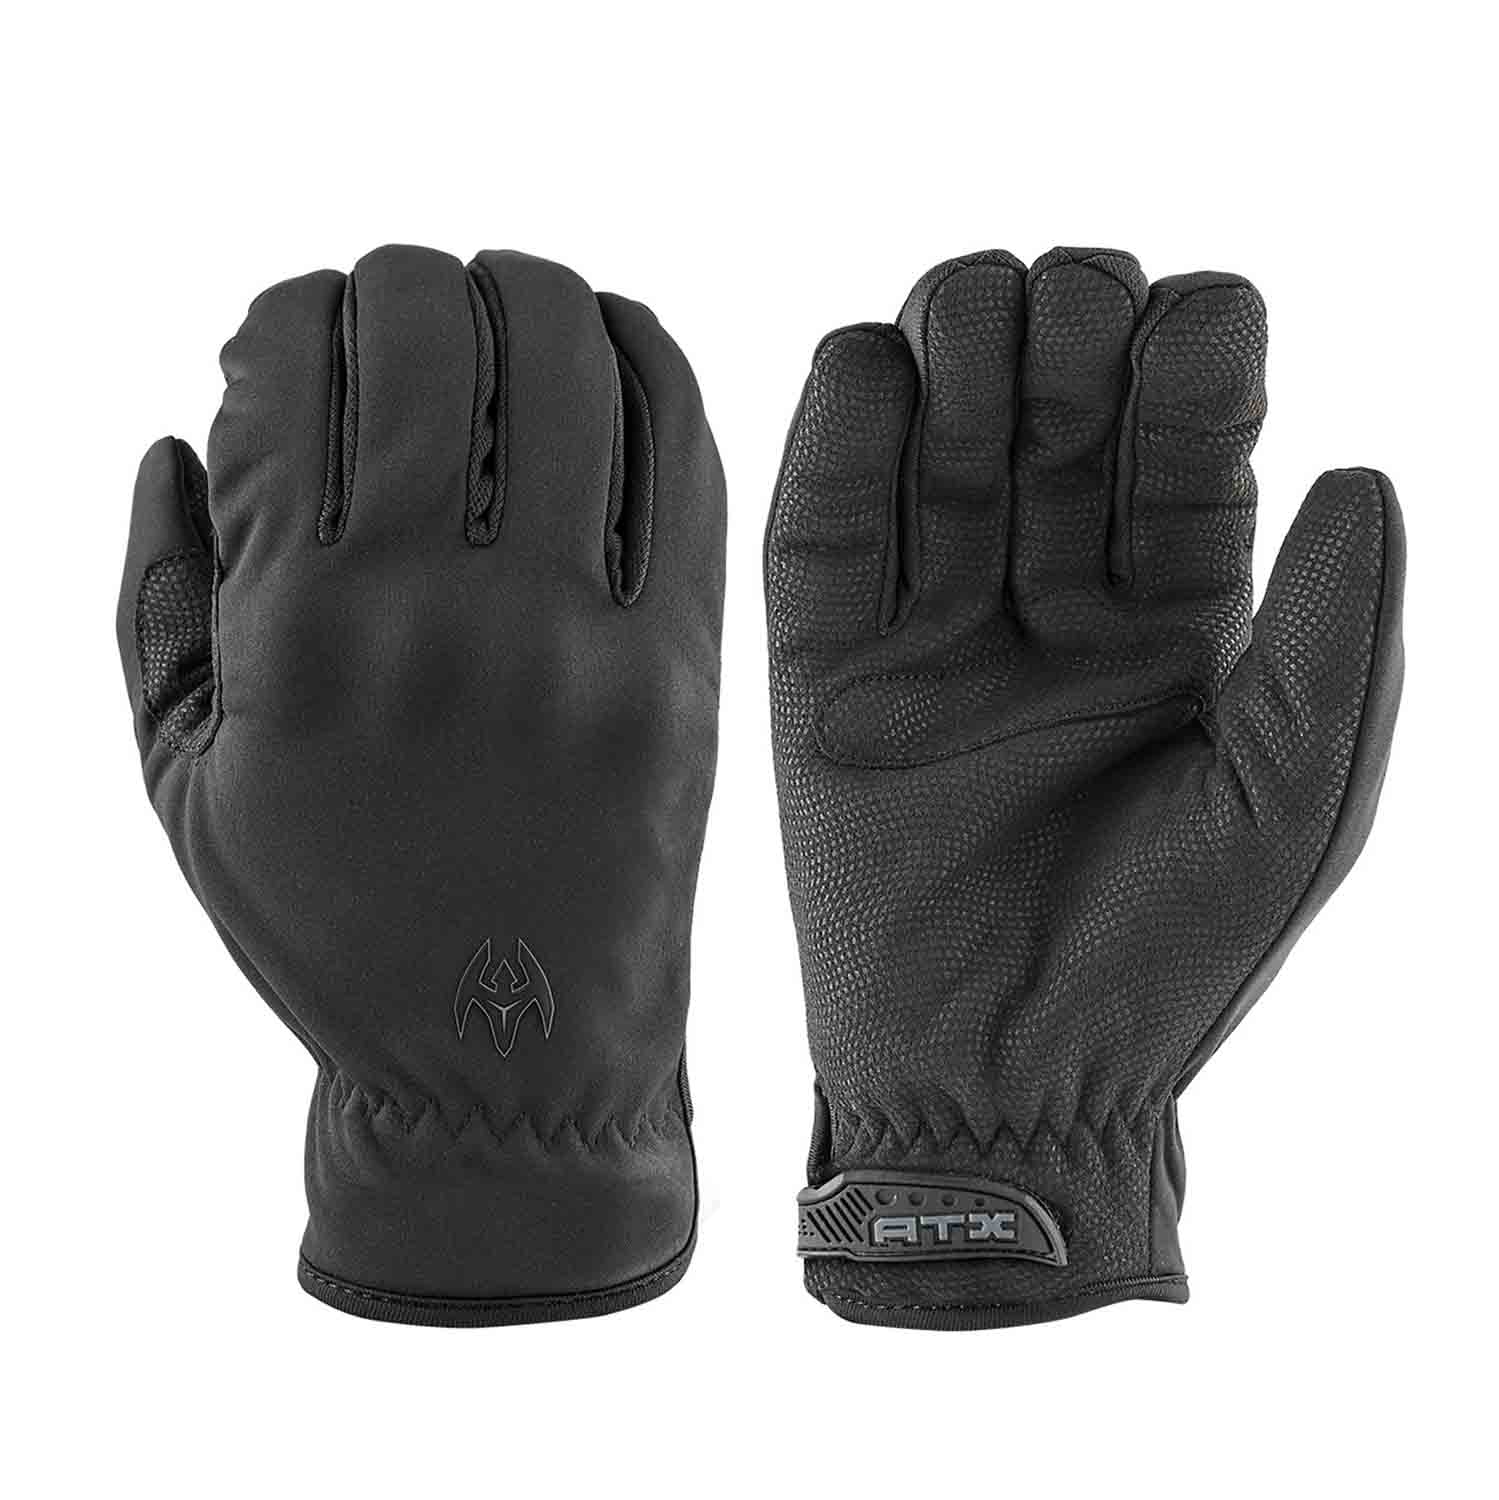 Damascus Winter Cut Resistant Patrol Gloves w/ Kevlar Palm